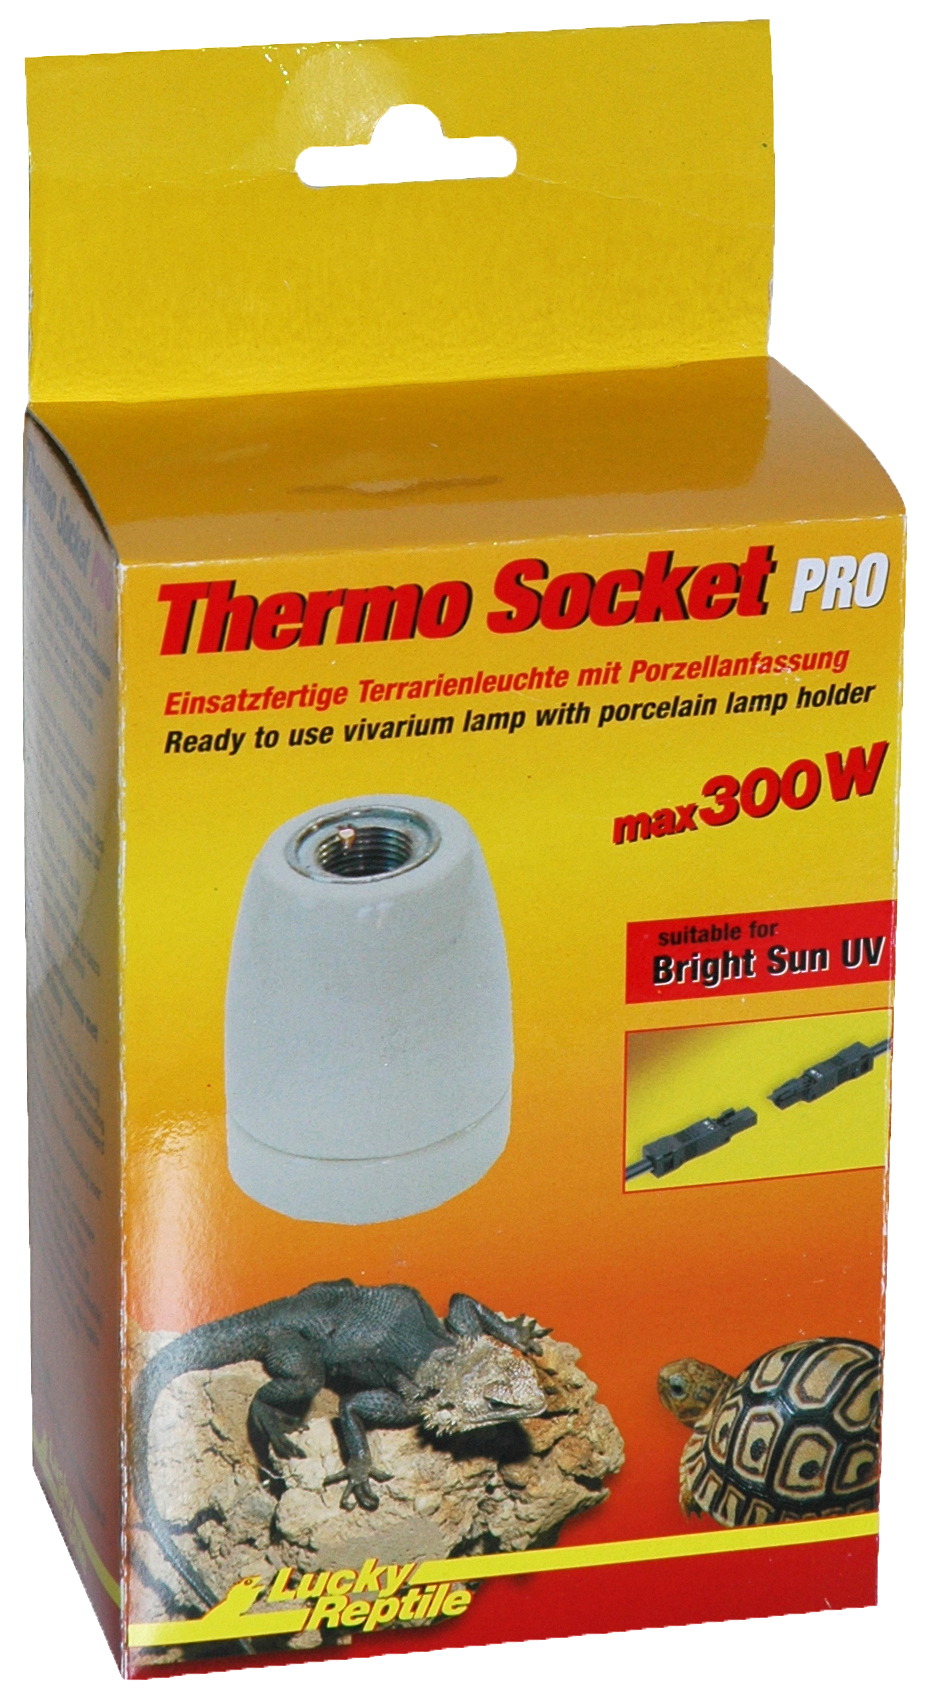 Import-Export Peter Hoch GmbH Thermo Socket PRO – Porzellanfassung